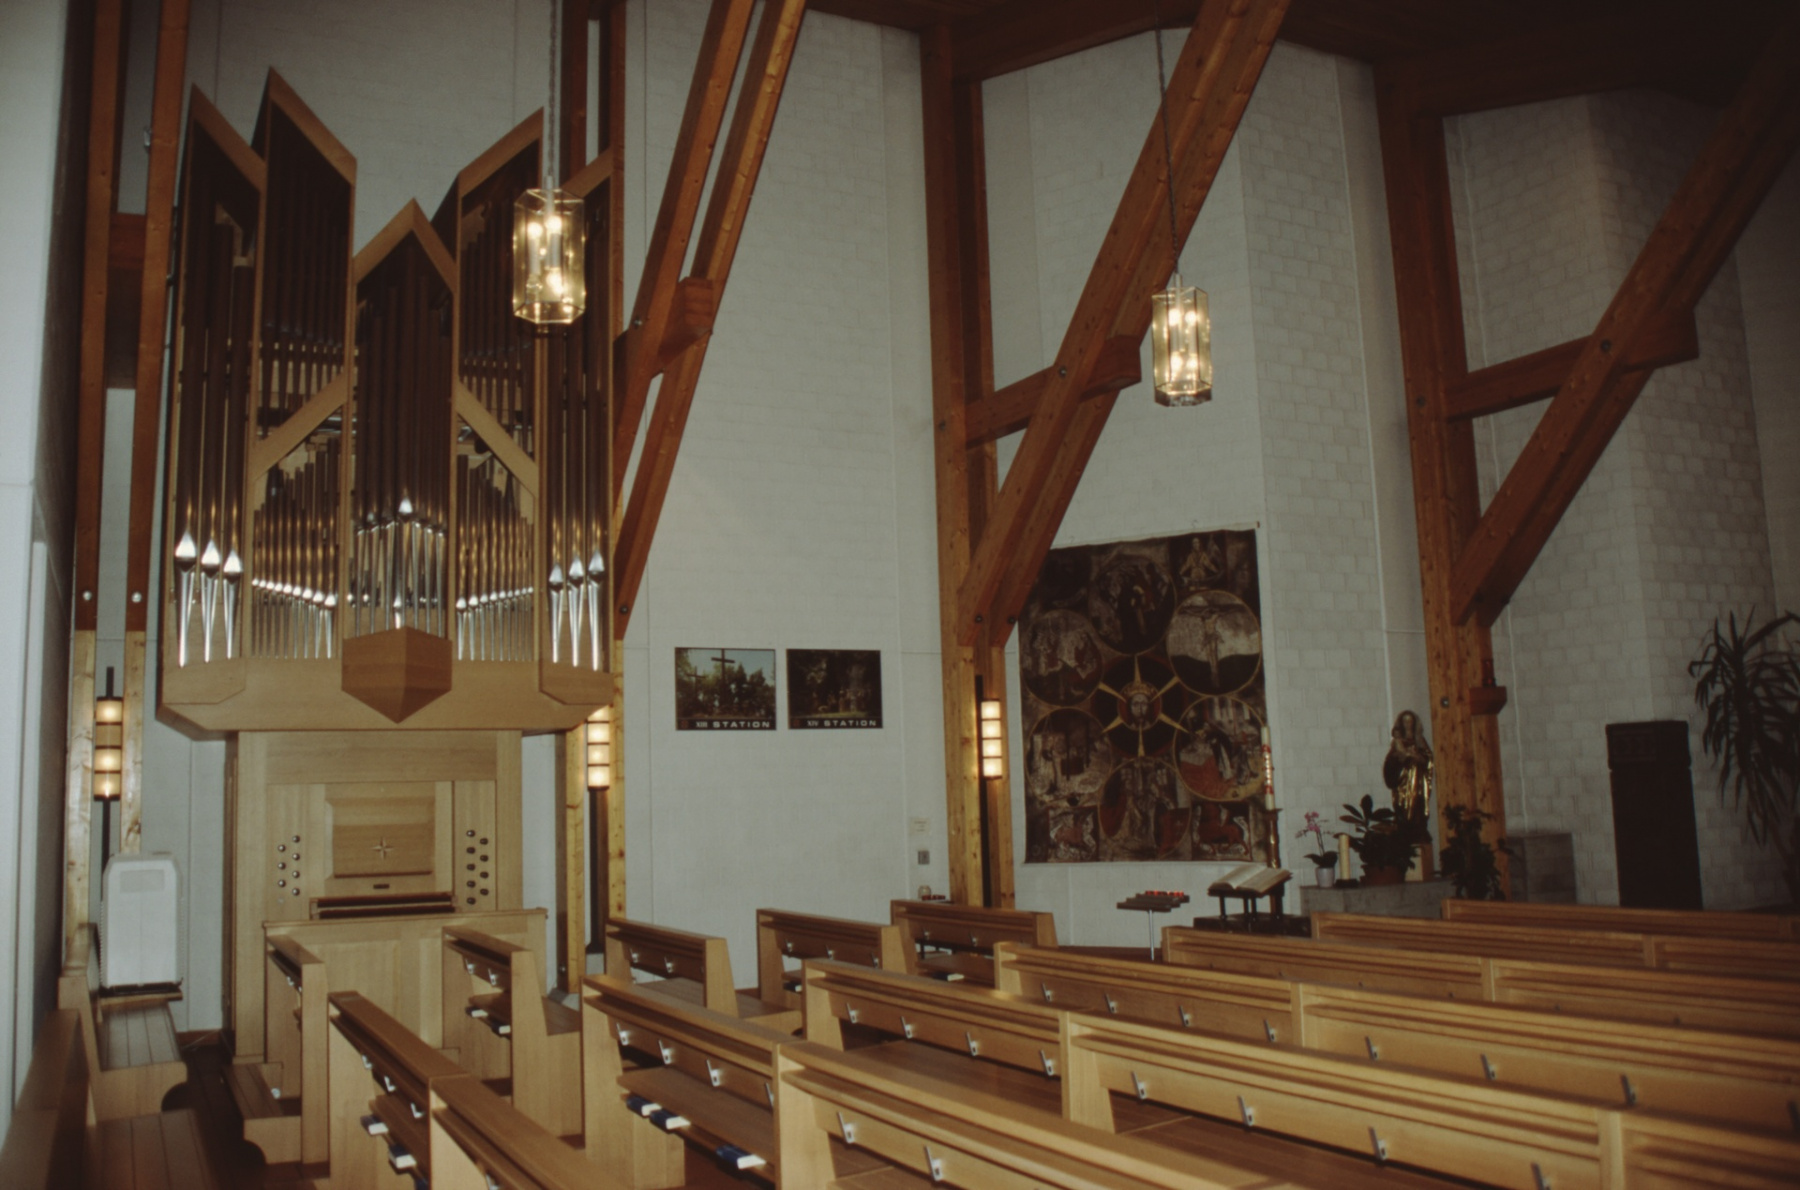 Kath. Kirche Innenraum mit Bruder Klaus Wandbehang (Vision)